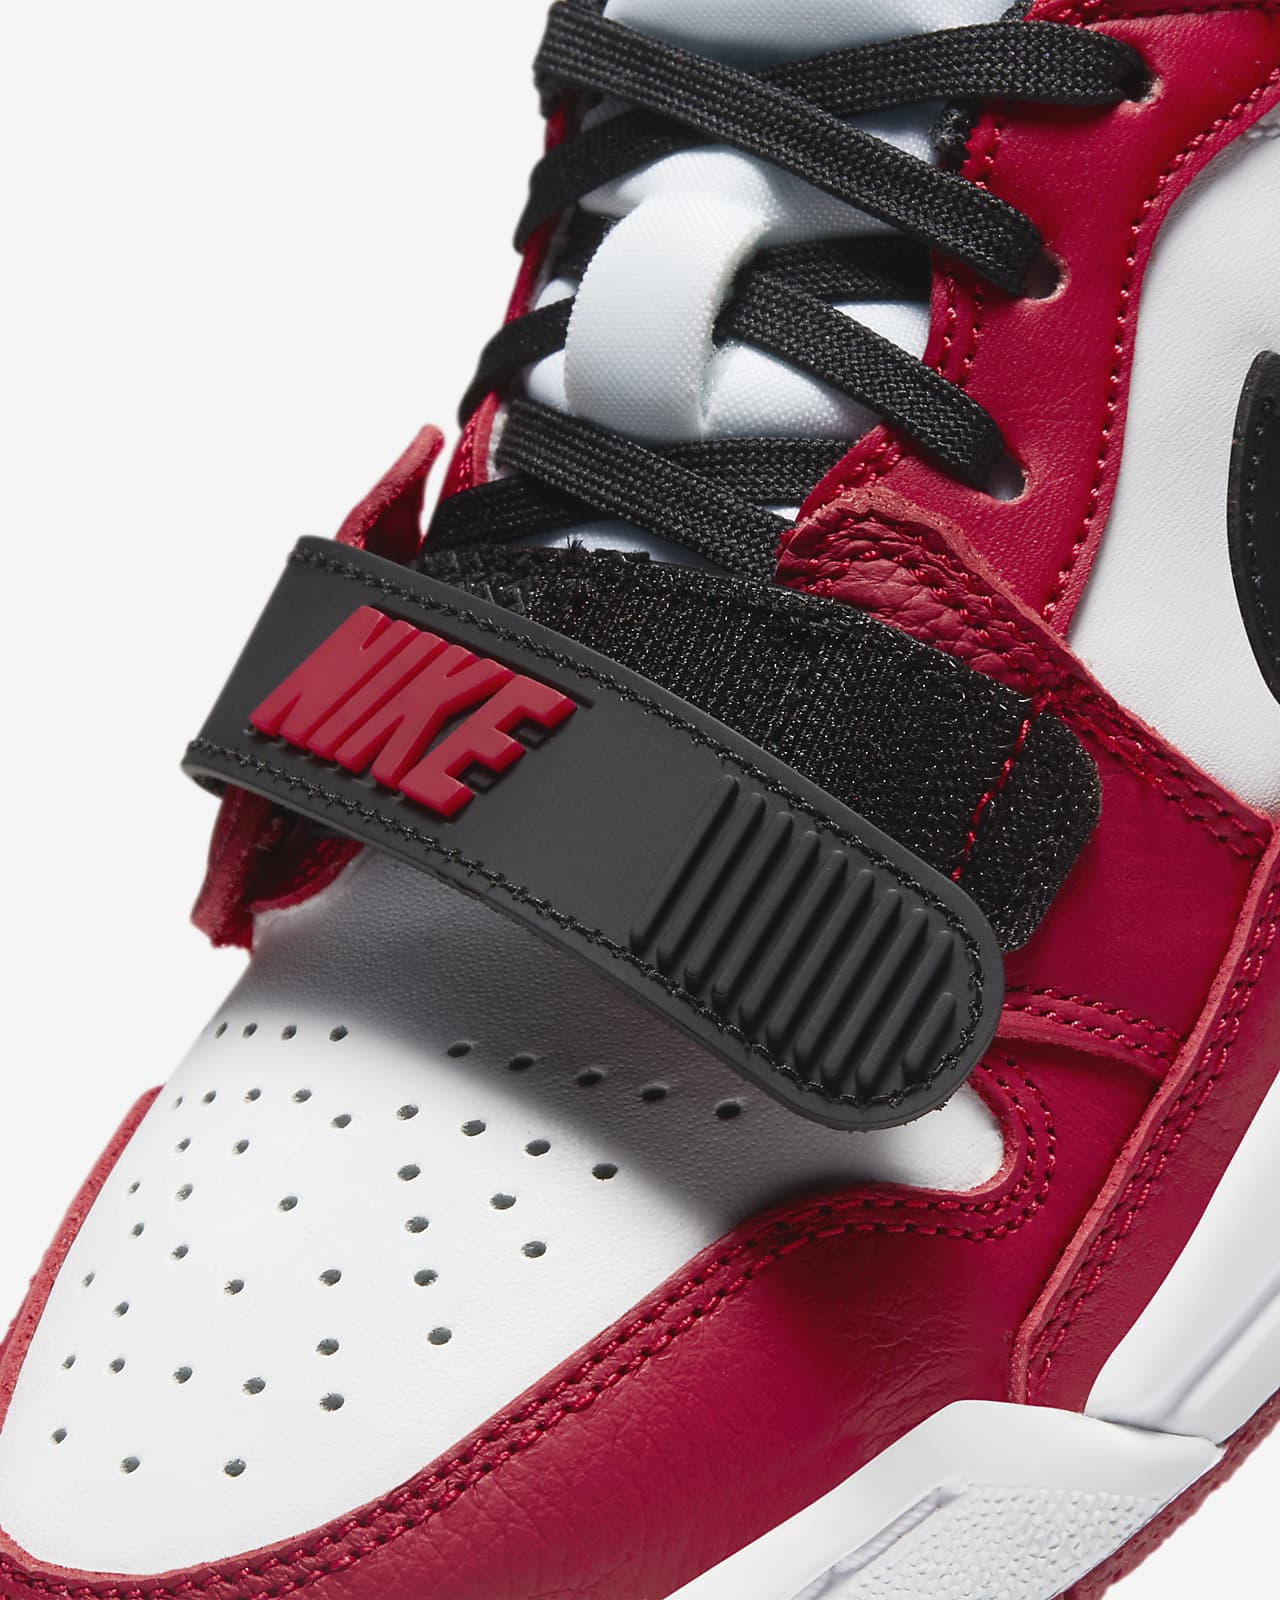 Air Jordan Legacy 312 Low Older Kids' Shoes. Nike LU